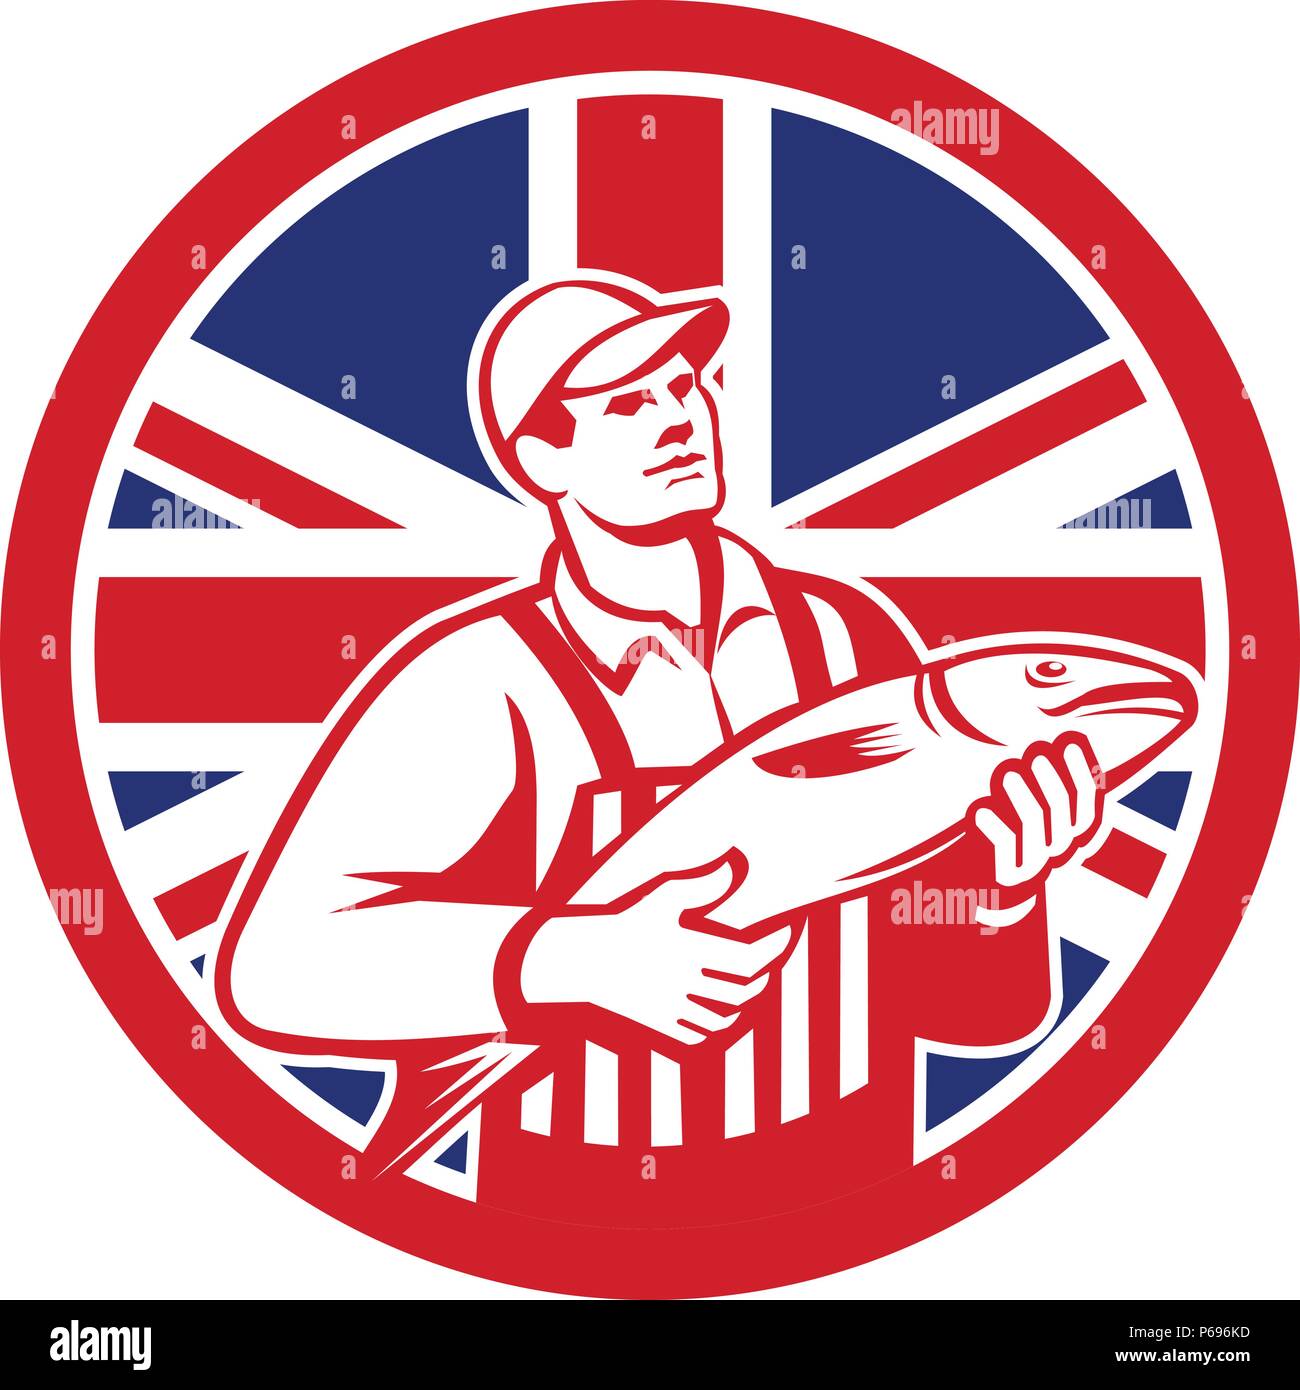 Icon retro style illustration of a British fishmonger selling fish with United Kingdom UK, Great Britain Union Jack flag set inside circle on isolated Stock Vector